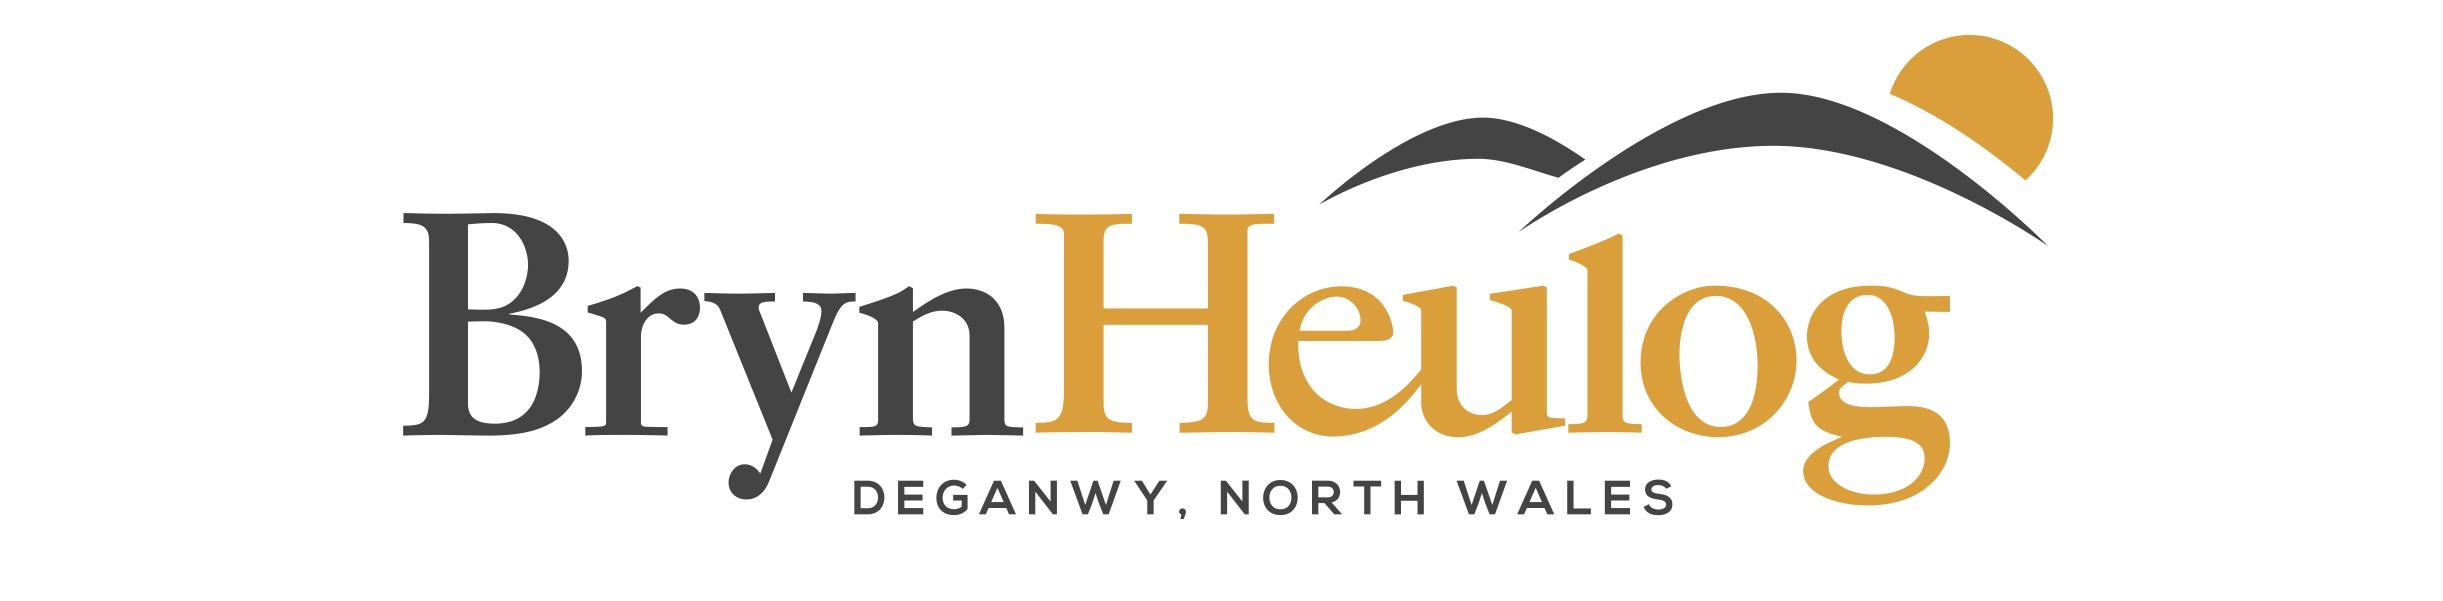 Bryn-Heulog-final-logo.jpg#asset:9161